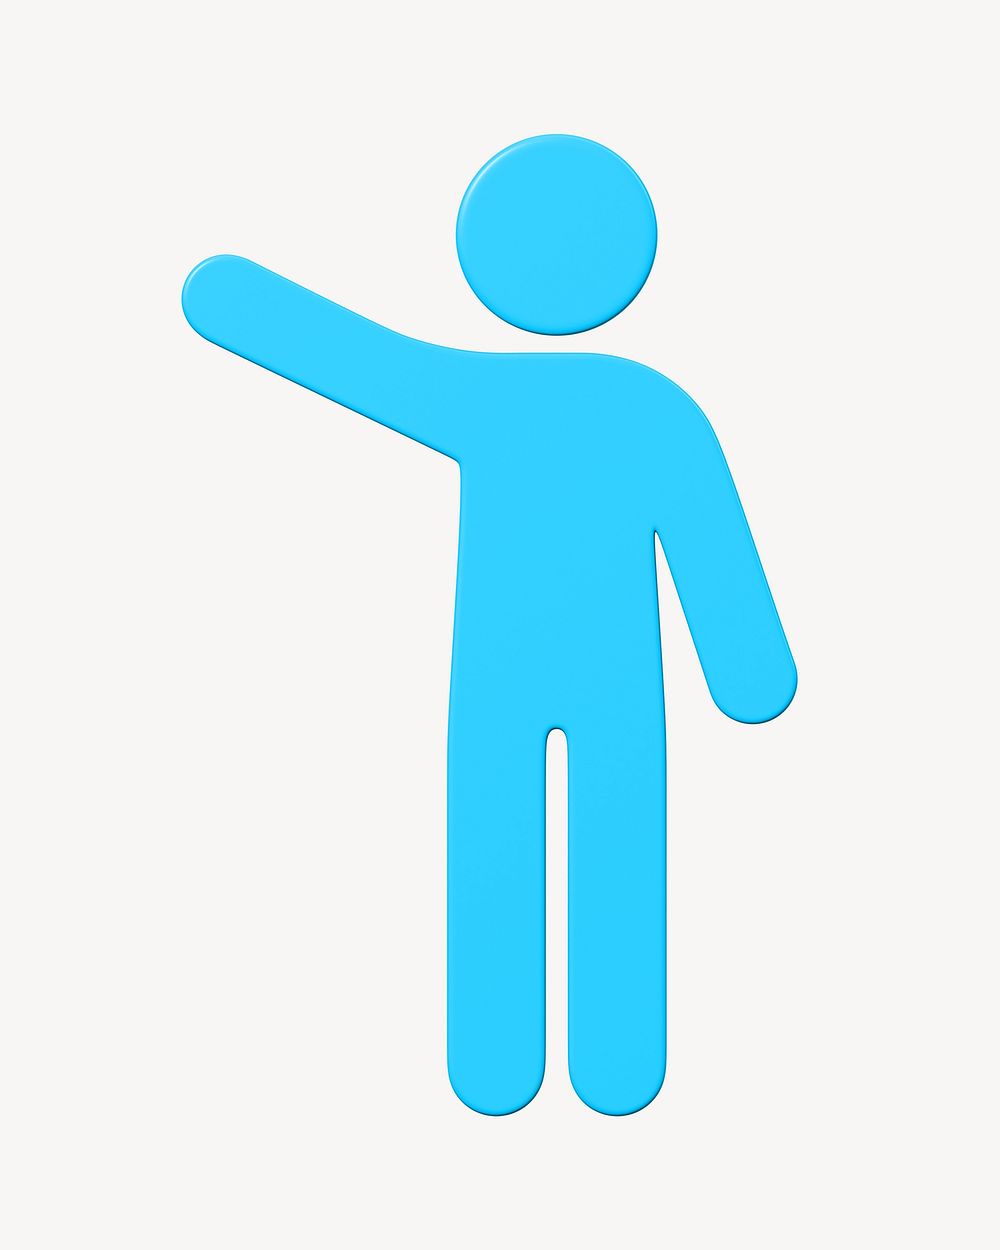 Blue man waving symbol, 3D rendering graphic